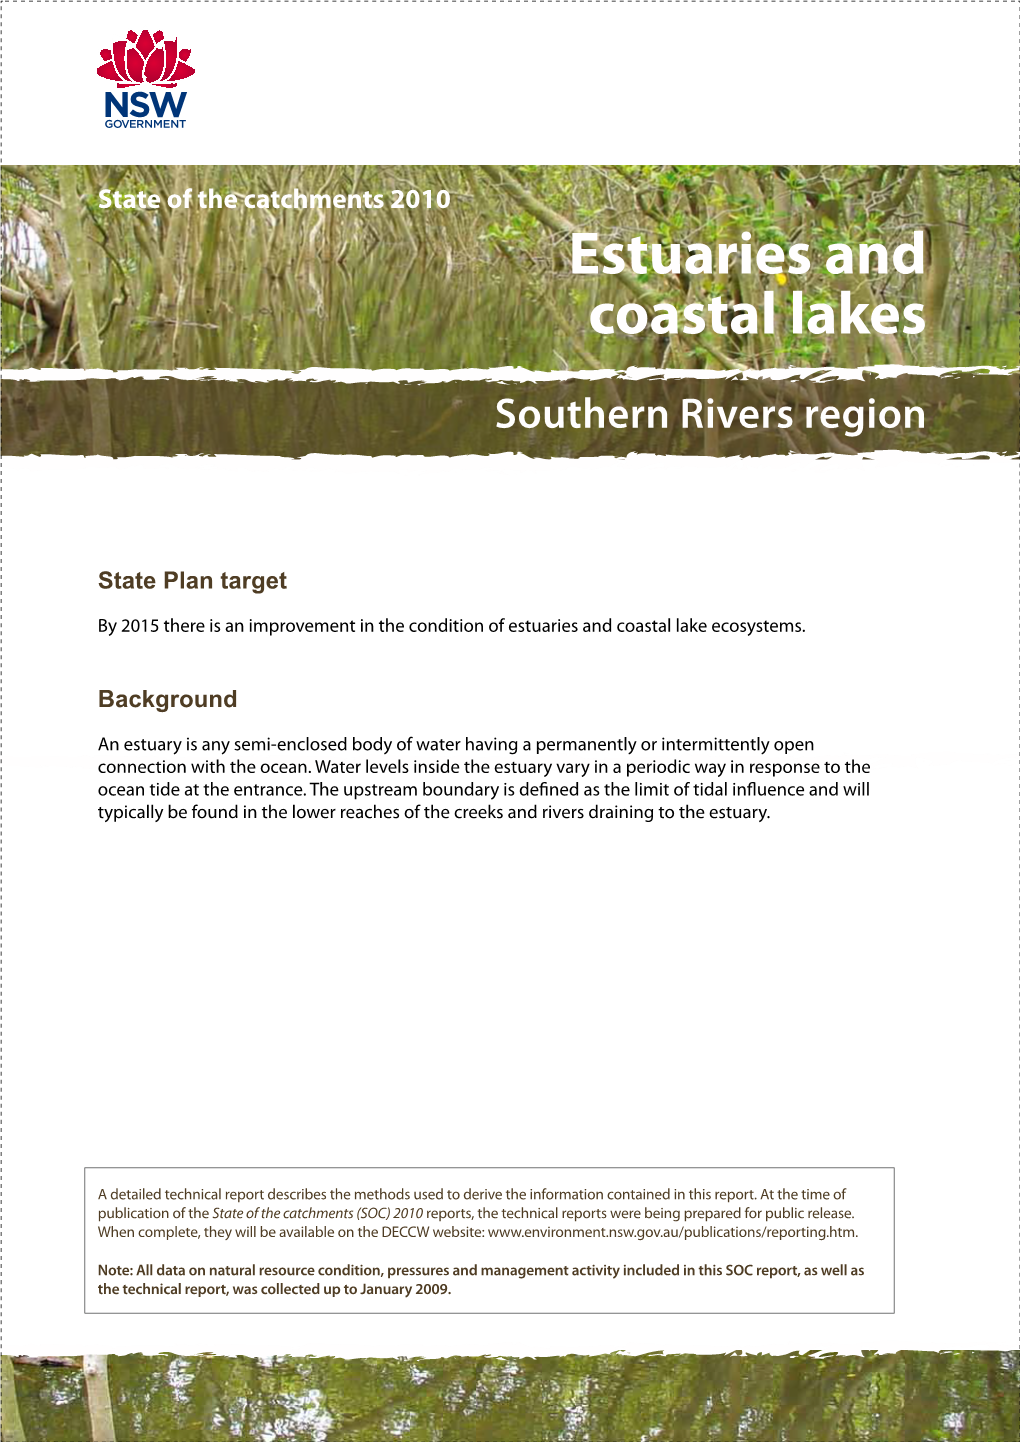 Southern Rivers Region